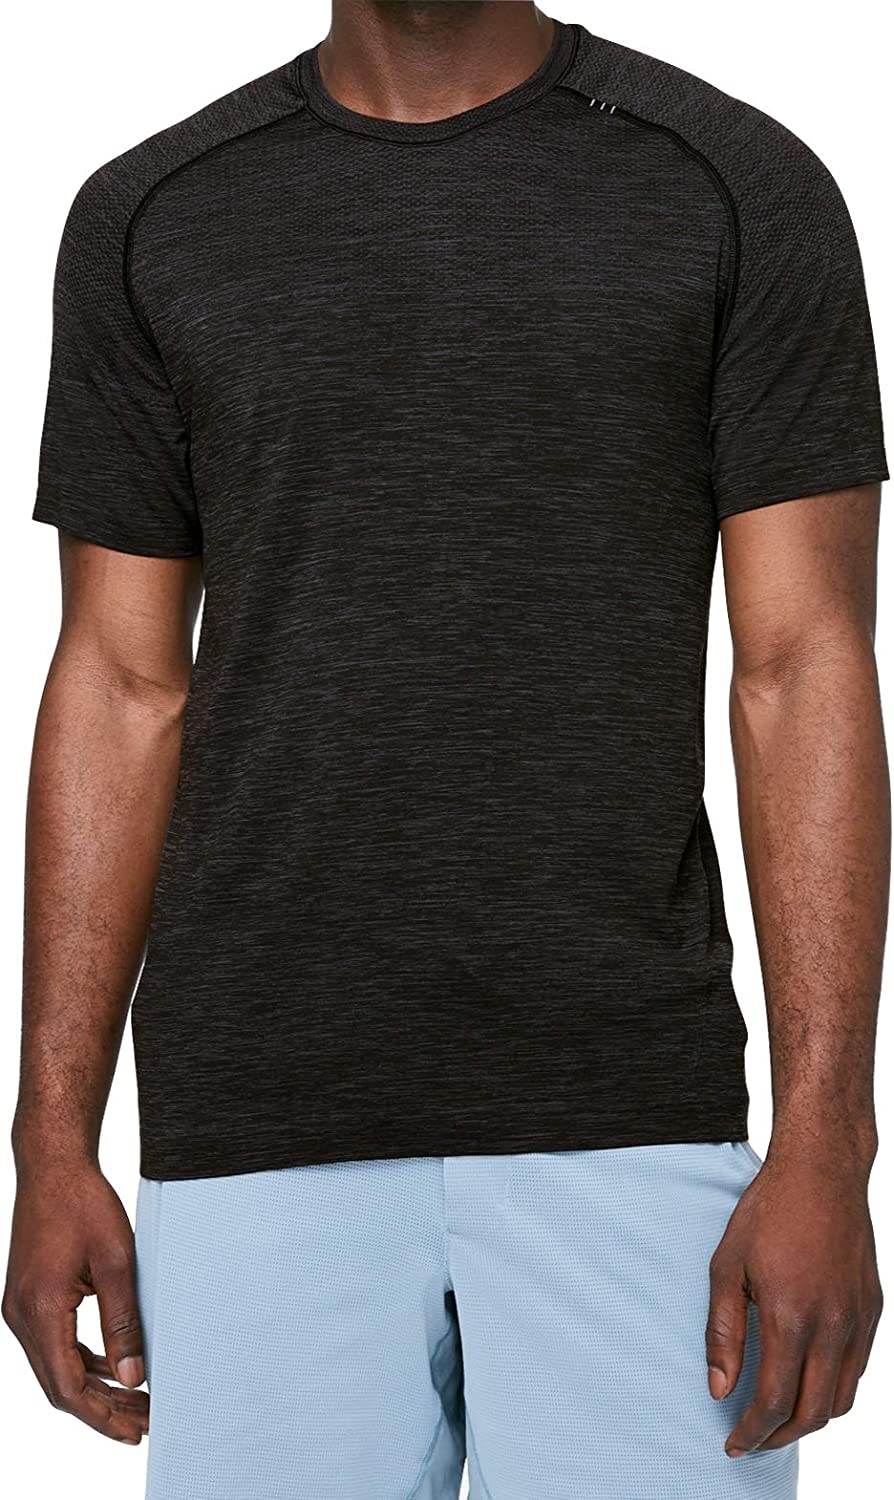 Lululemon Mens Metal Vent Tech Short Sleeve Shirt | eBay